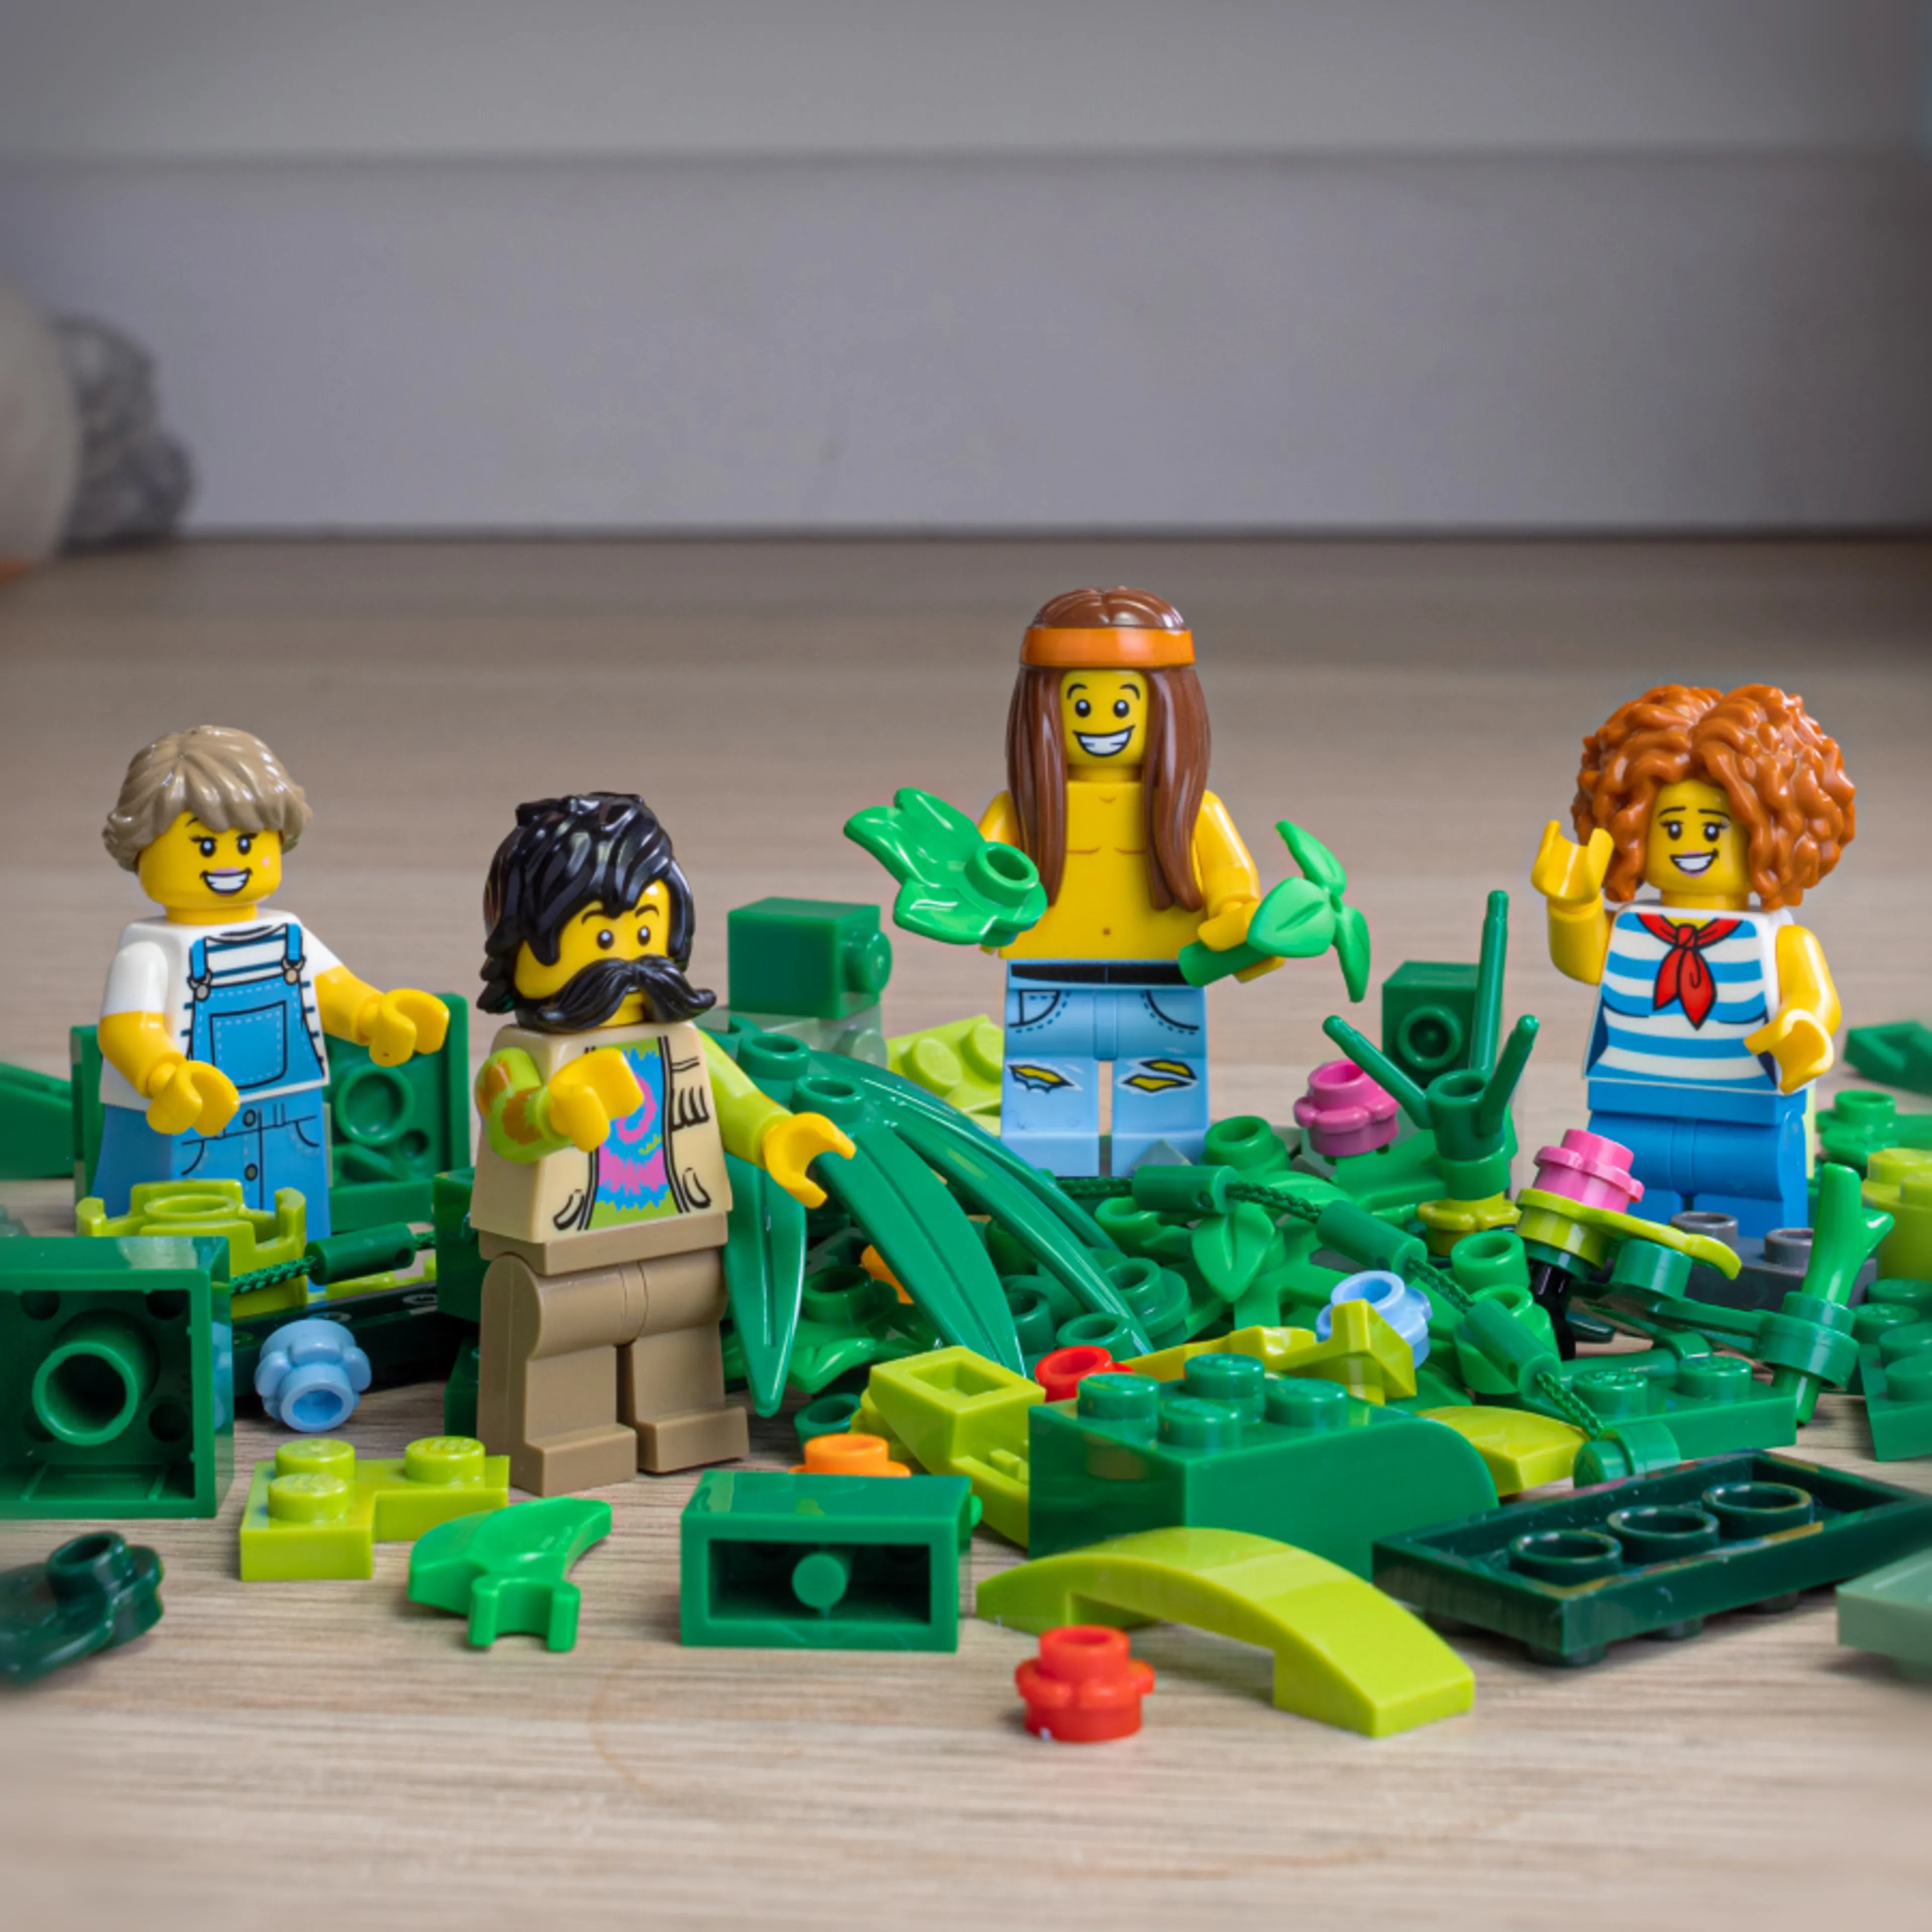 Grab your green LEGO® bricks